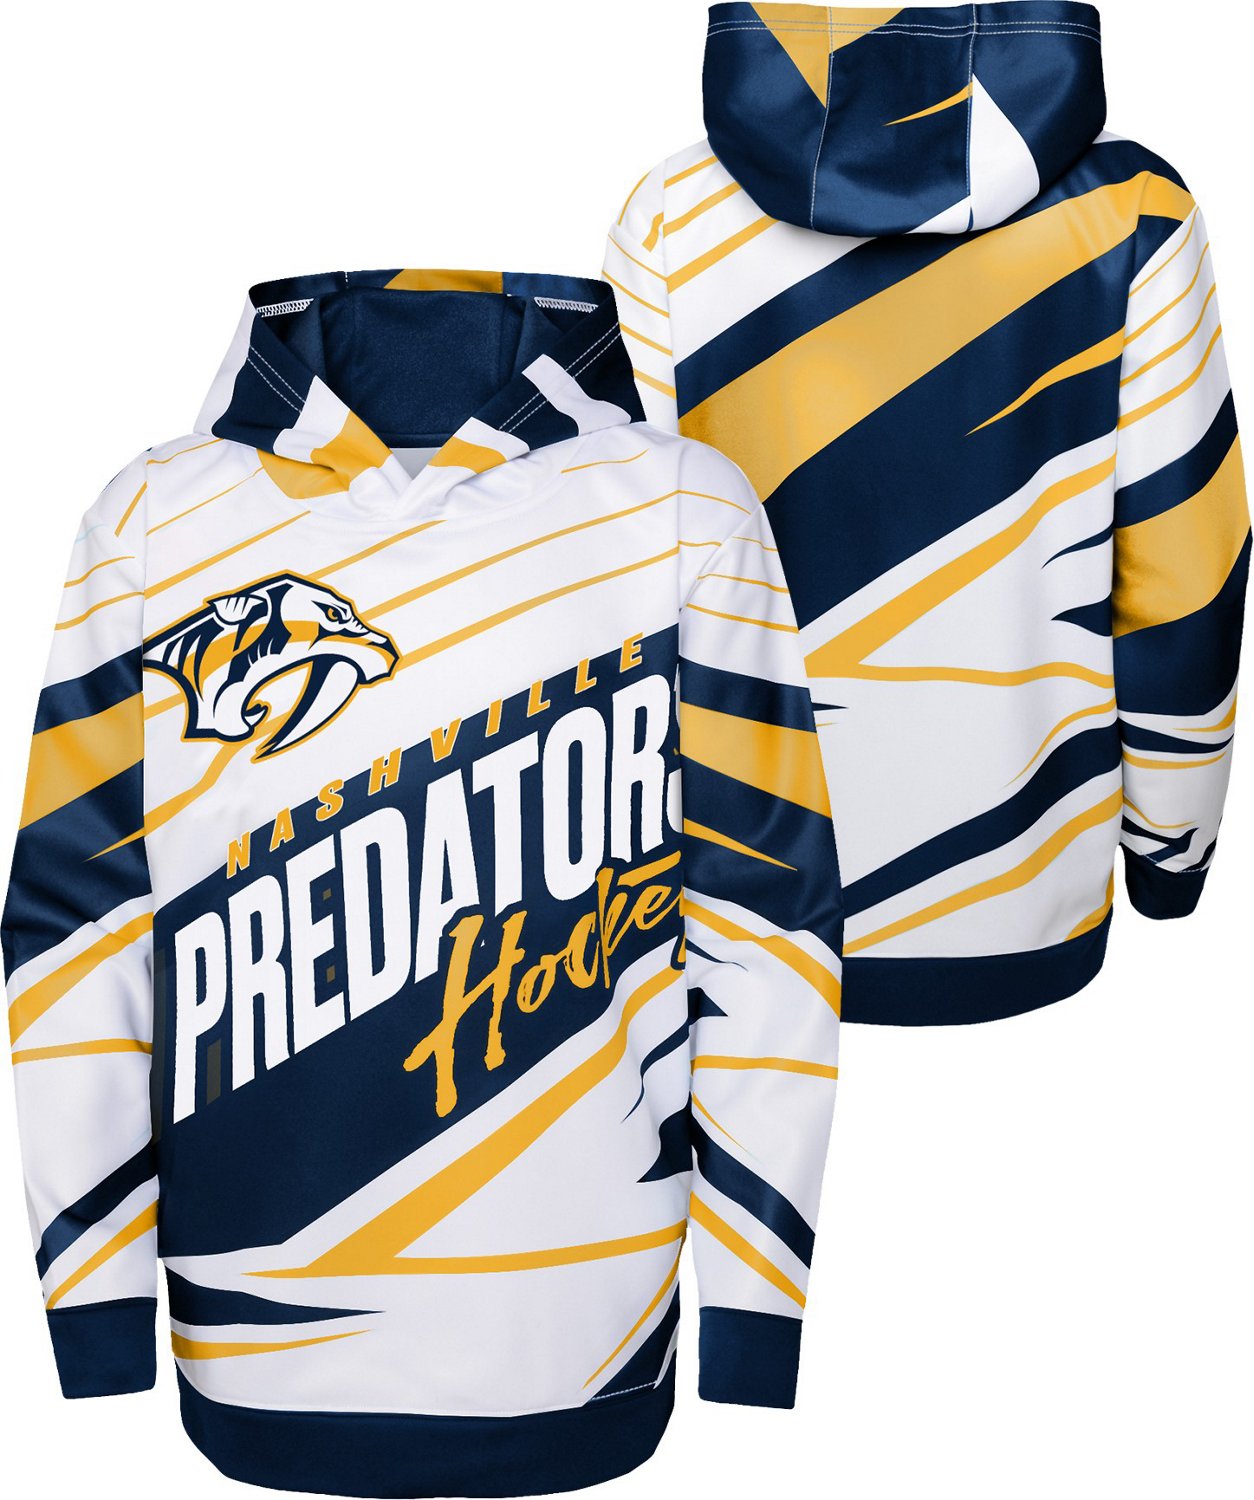 Outerstuff Rink Reimagined Long Sleeve Tee Shirt - Nashville Predators - Youth - Nashville Predators - L